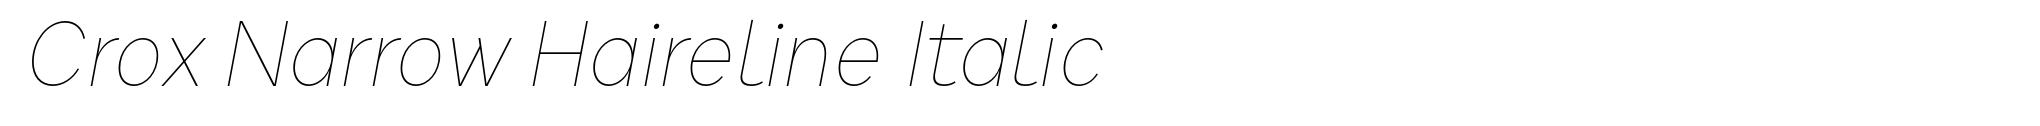 Crox Narrow Haireline Italic image